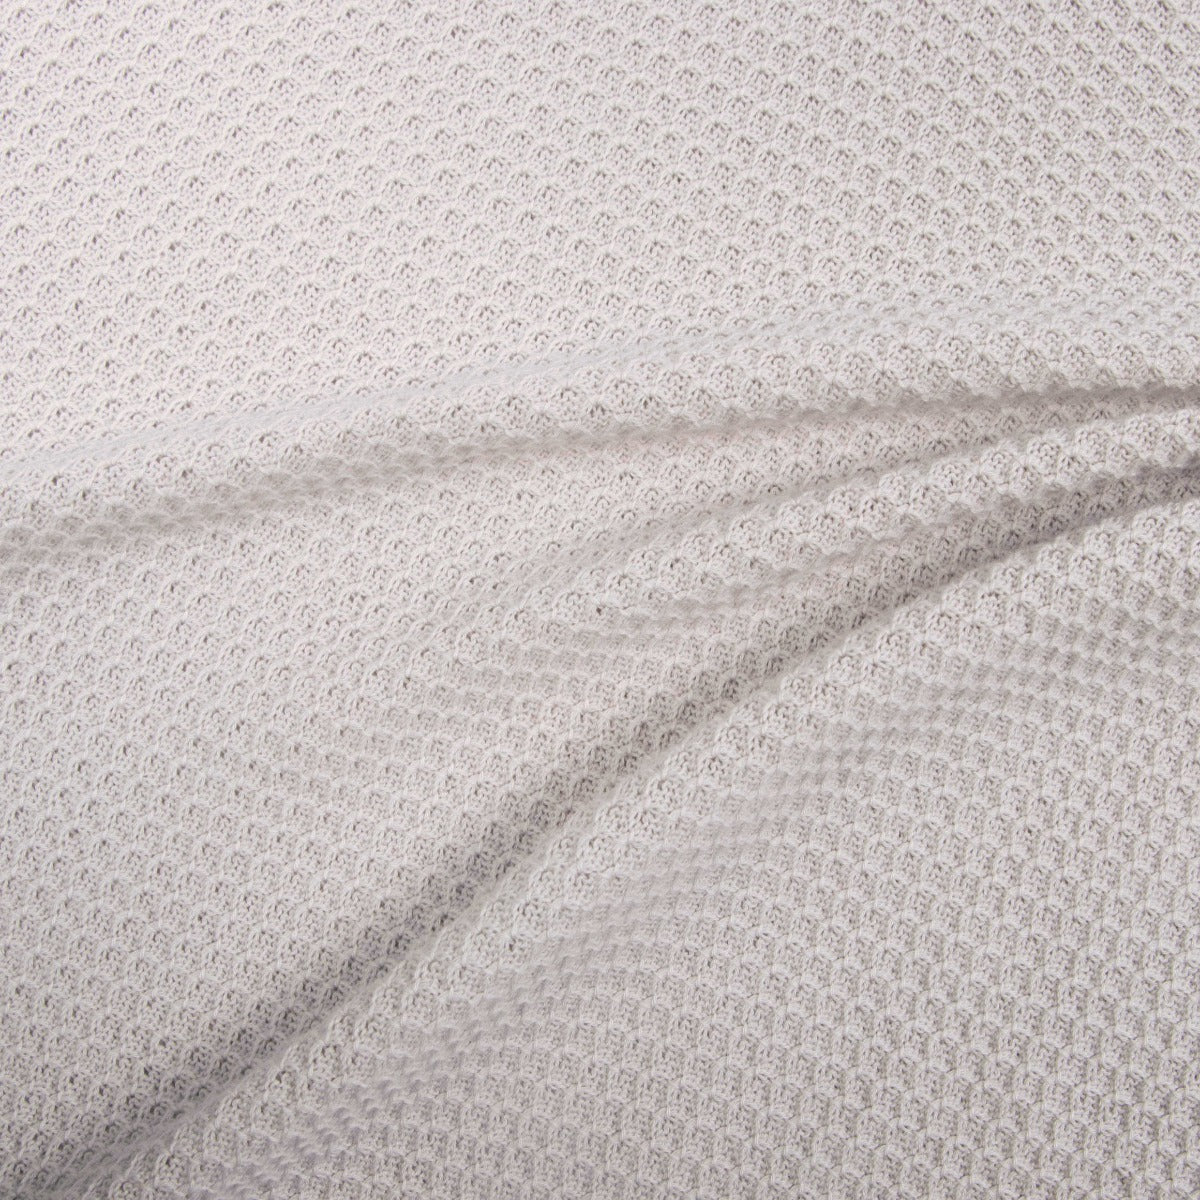 Light Grey 100% Cotton Knit Polo Shirt  Robert Old   